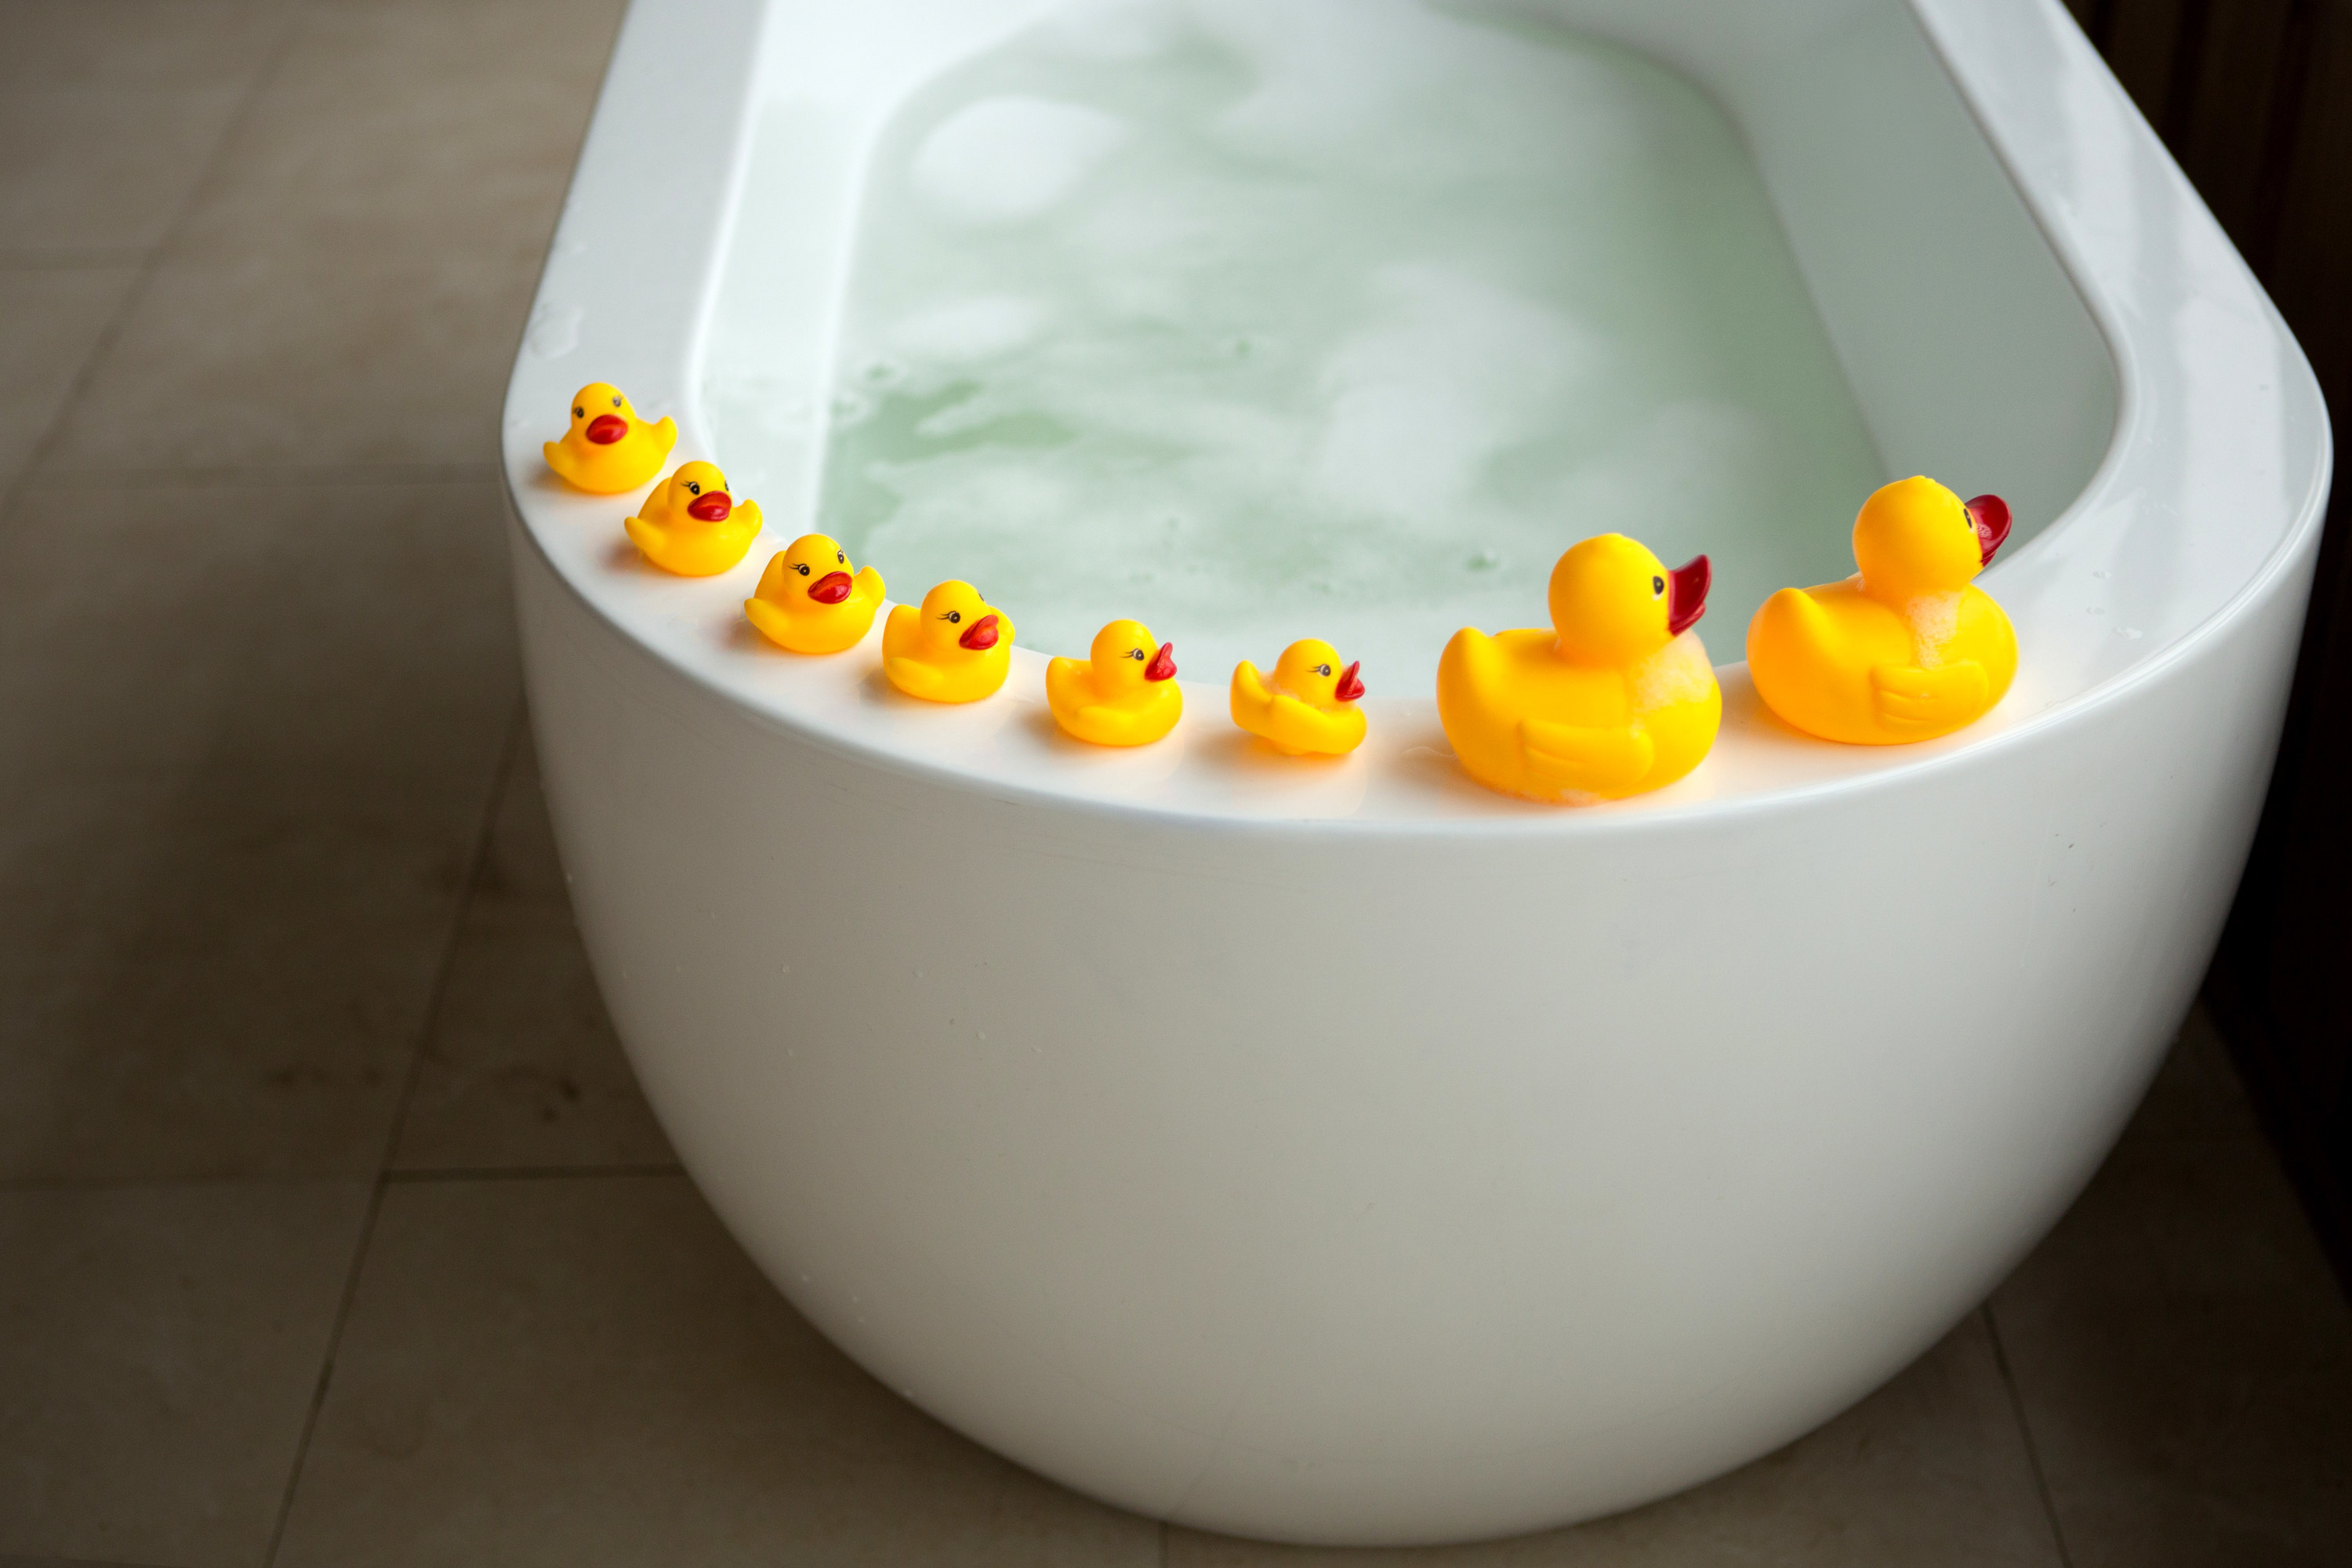 rubber ducks lined up on bathtub ledge